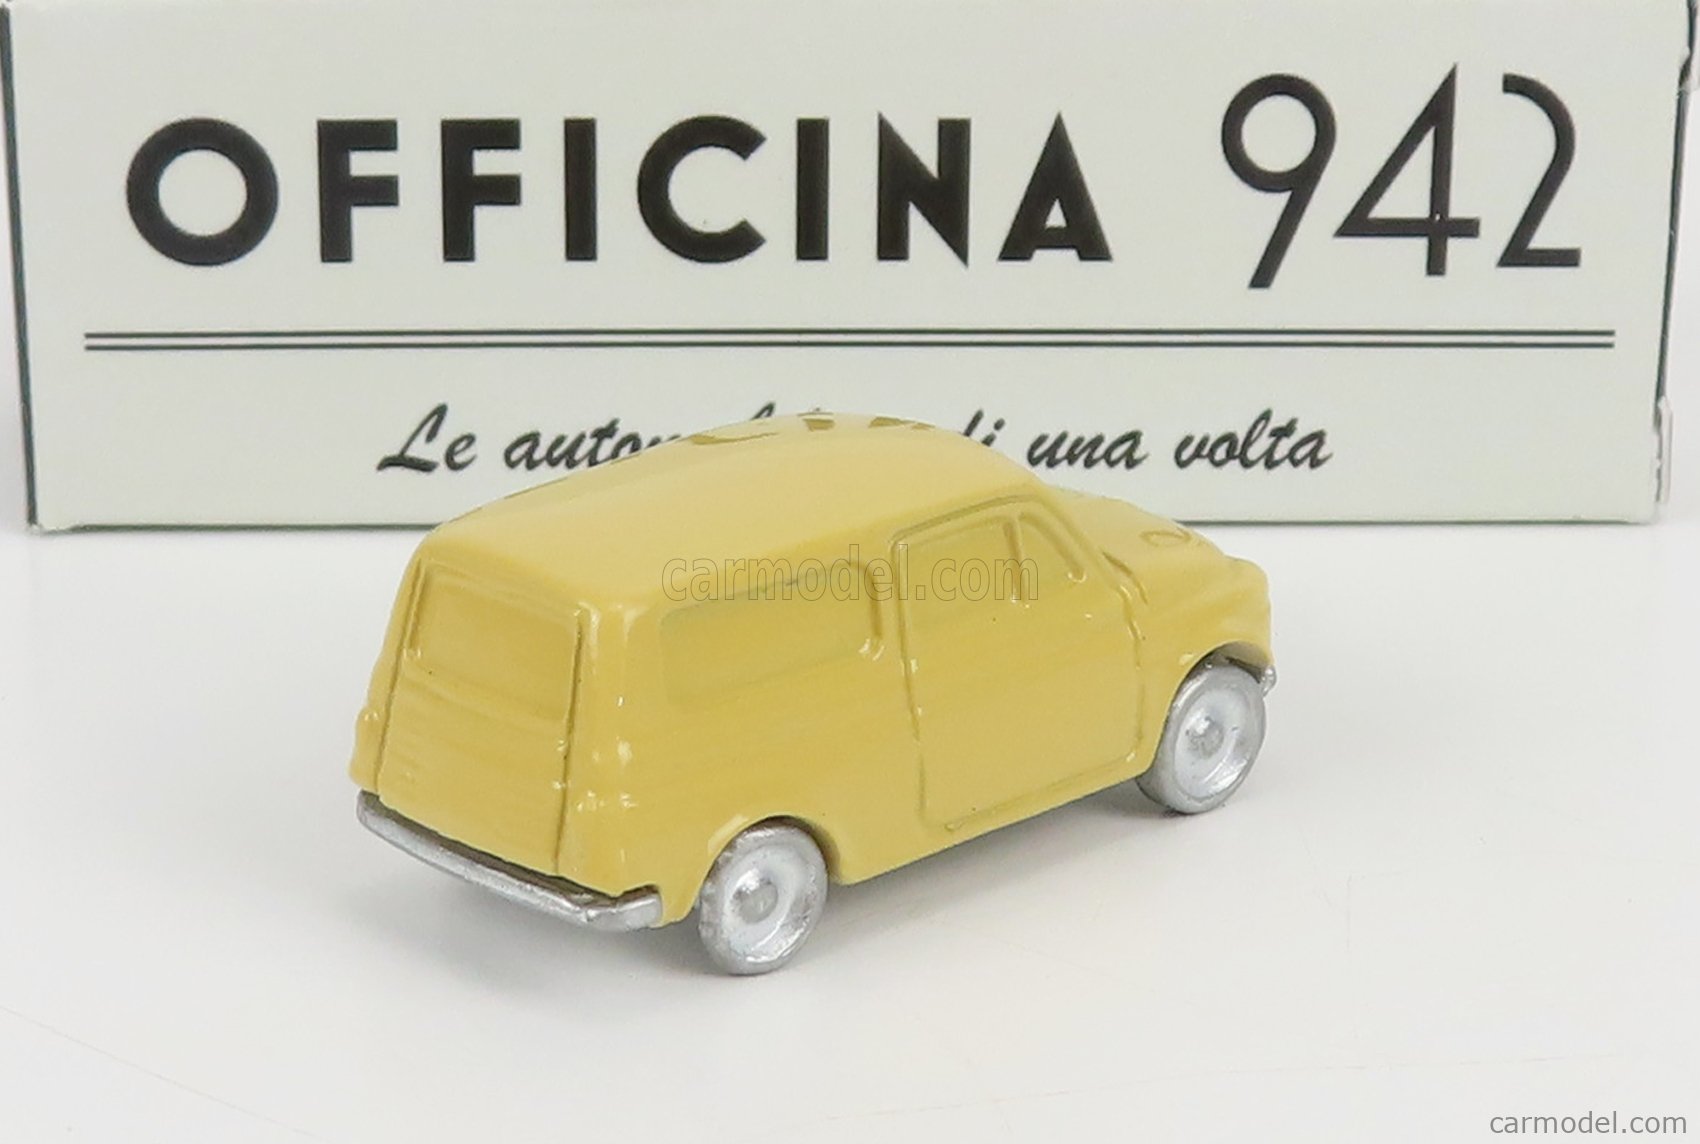 OFFICINA-942 ART2031A Masstab: 1/76  FIAT 500 UTILITY FRANCIS LOMBARDI 1959 BEIGE